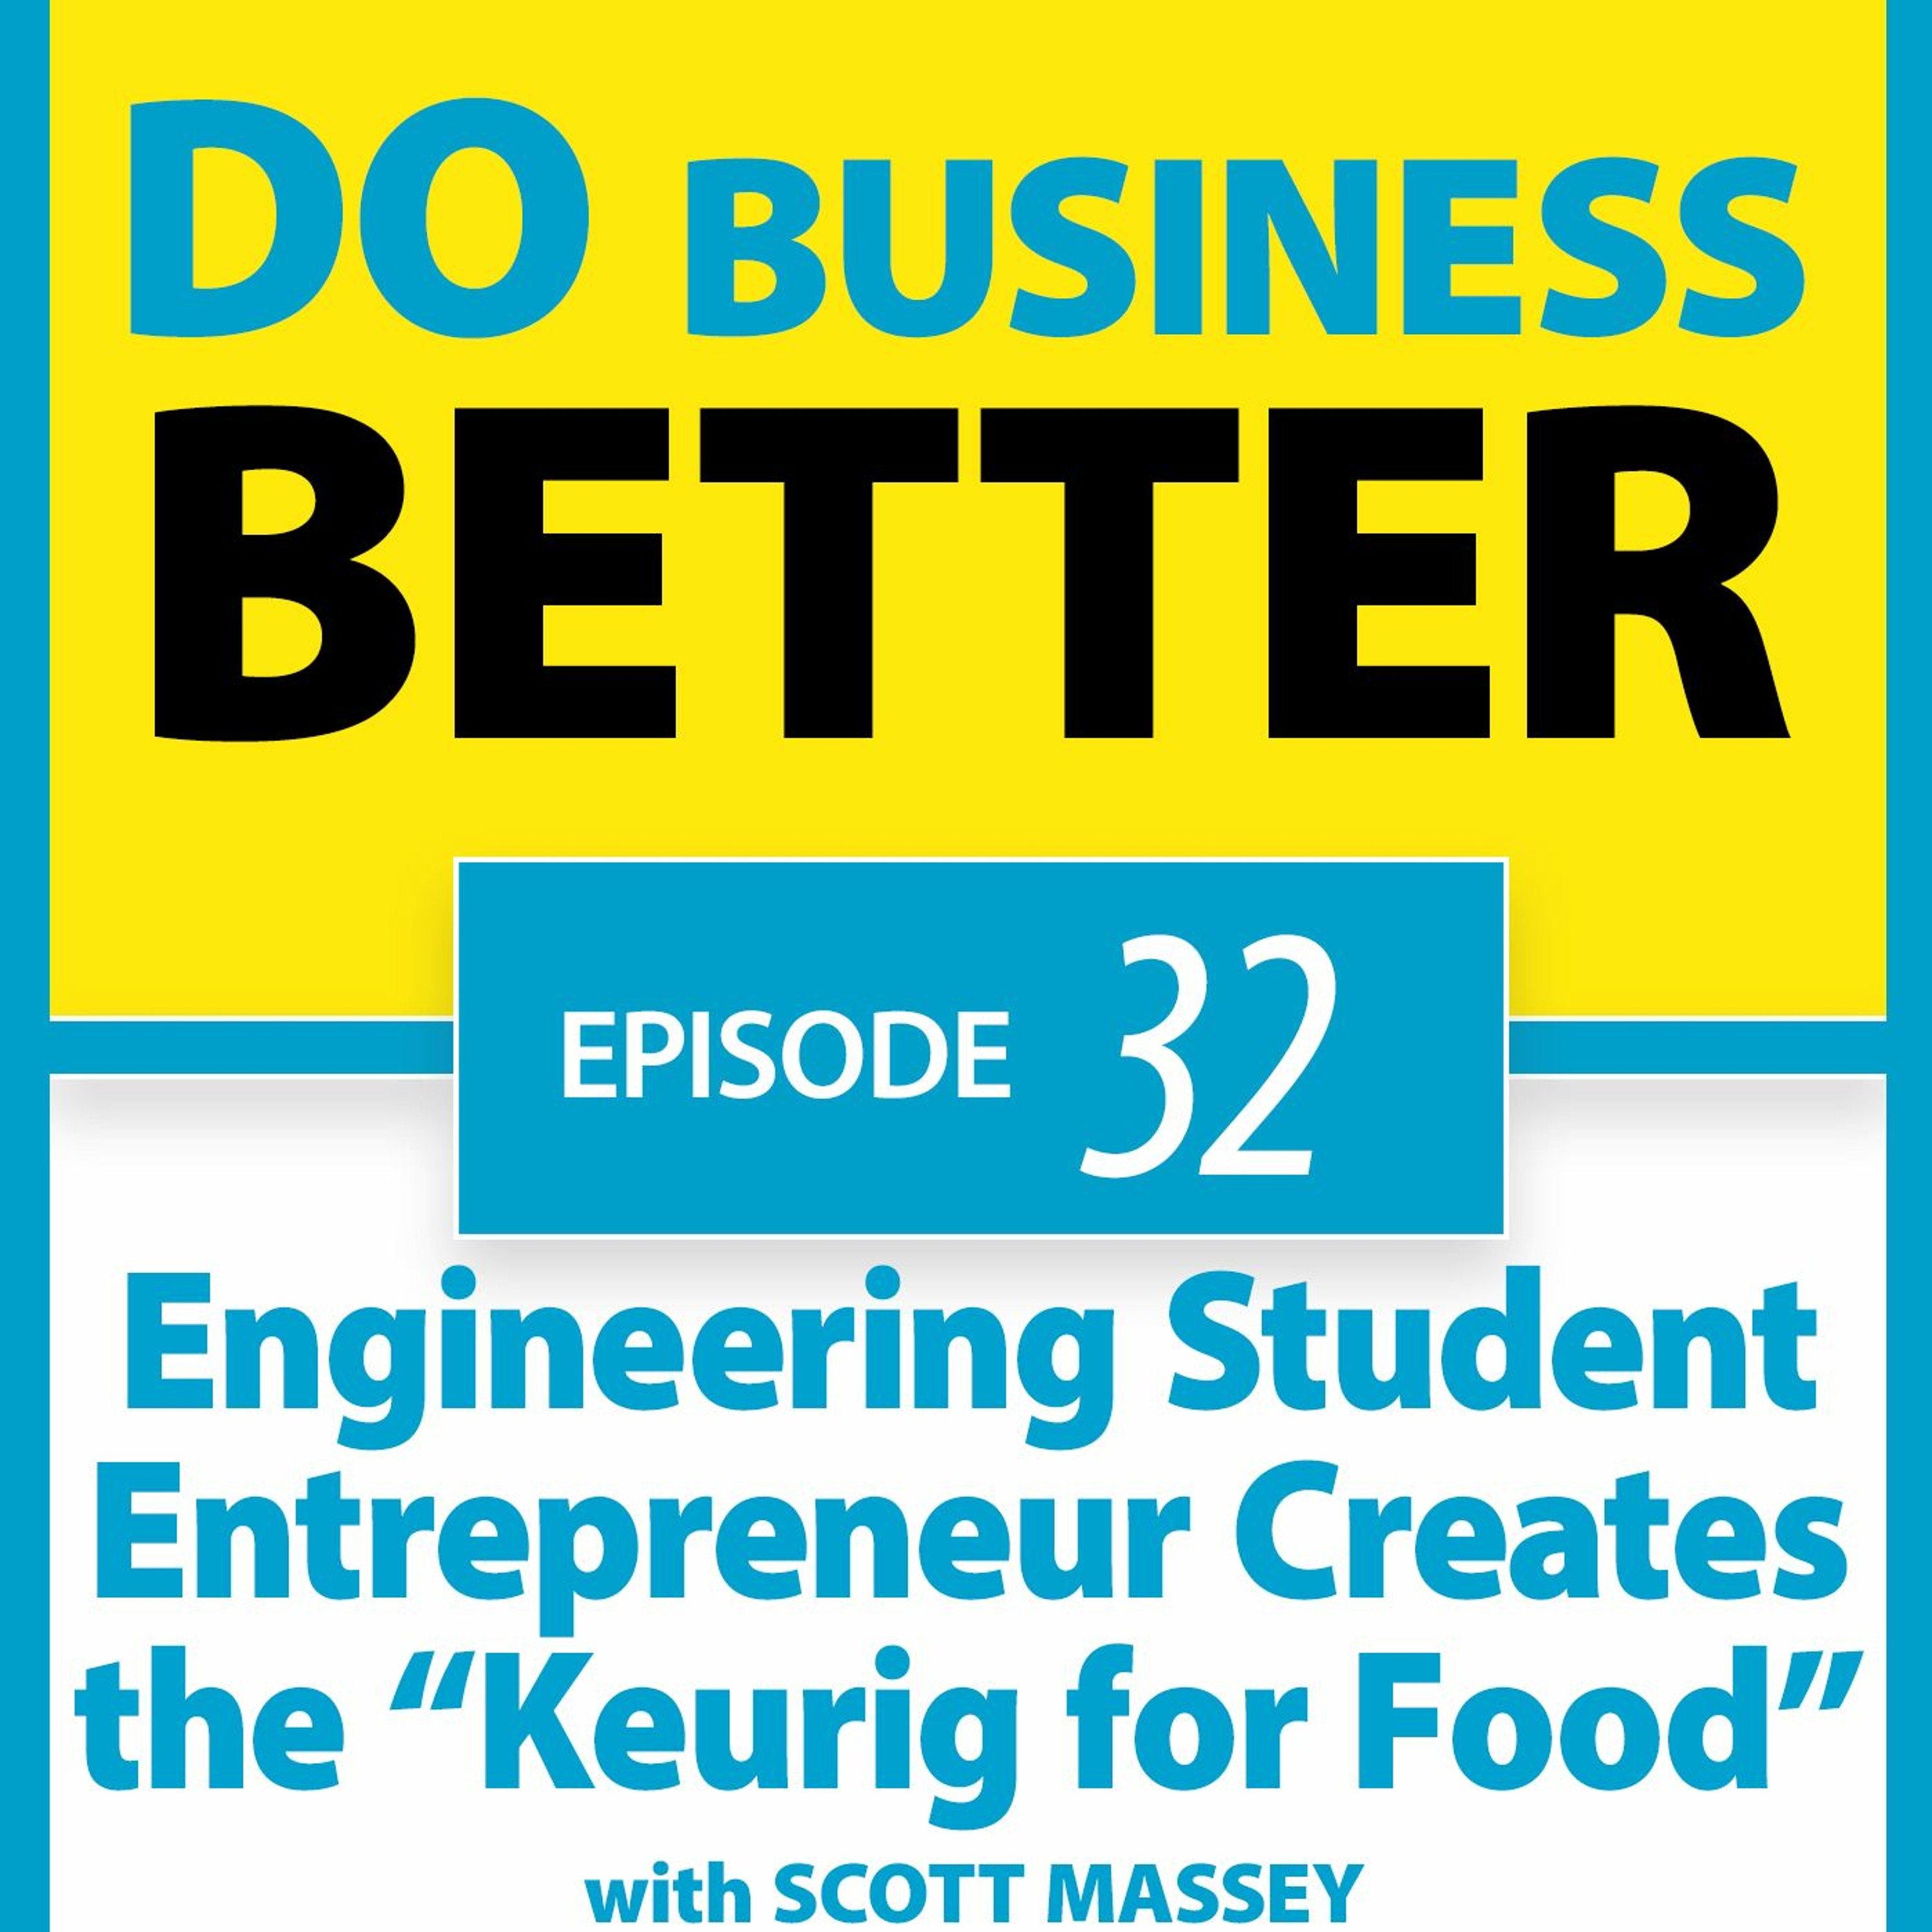 32 - Engineering Student Entrepreneur Creates the “Keurig for Food”